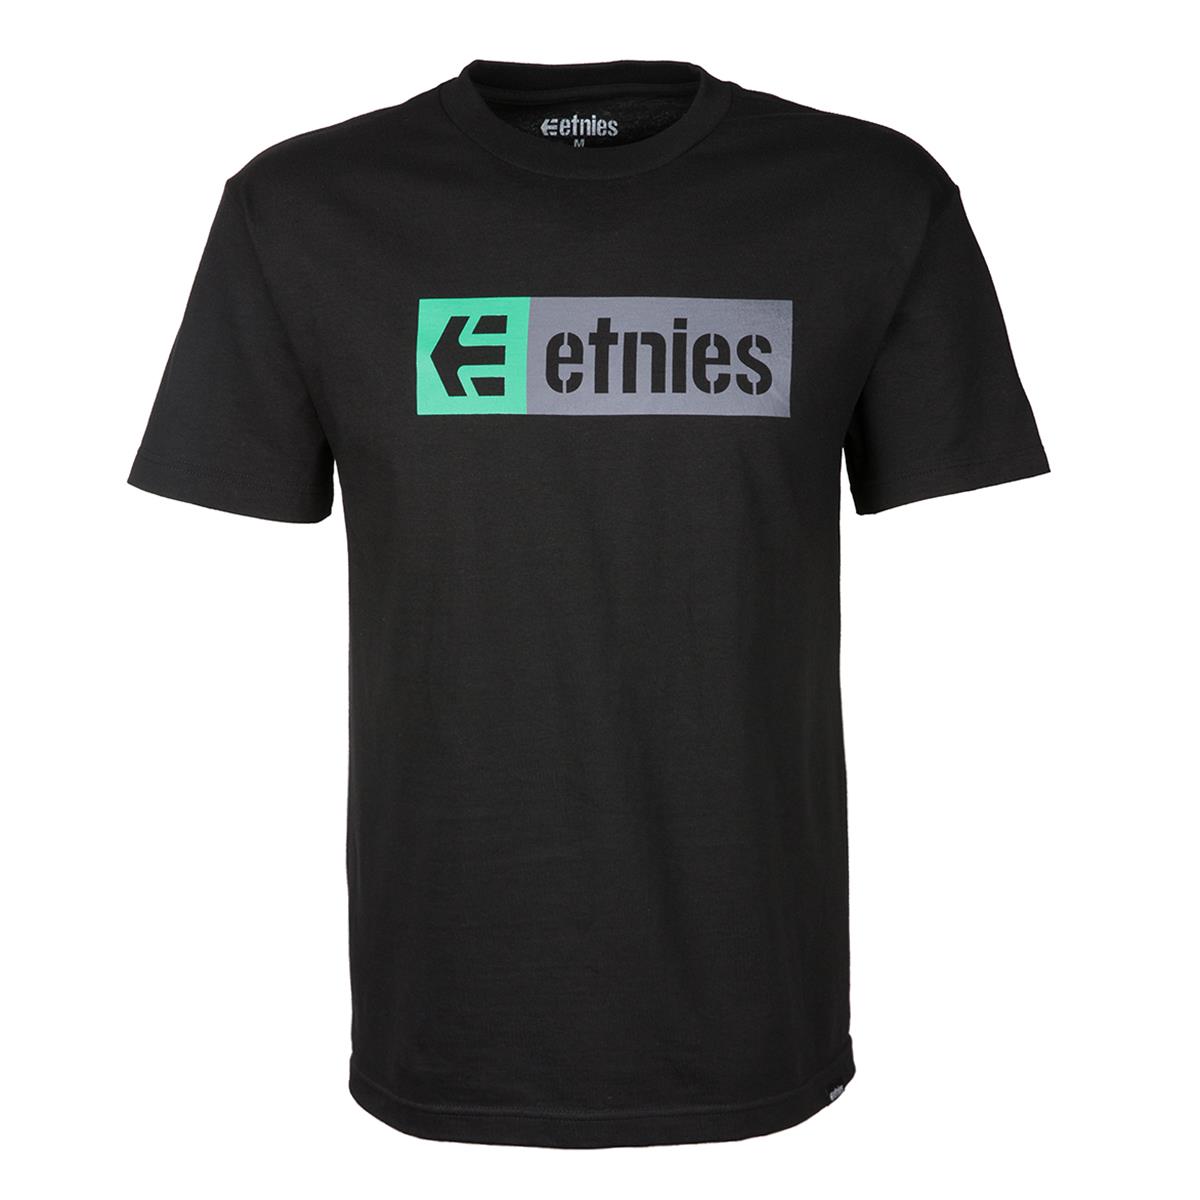 Etnies T-Shirt New Box Schwarz/Grün